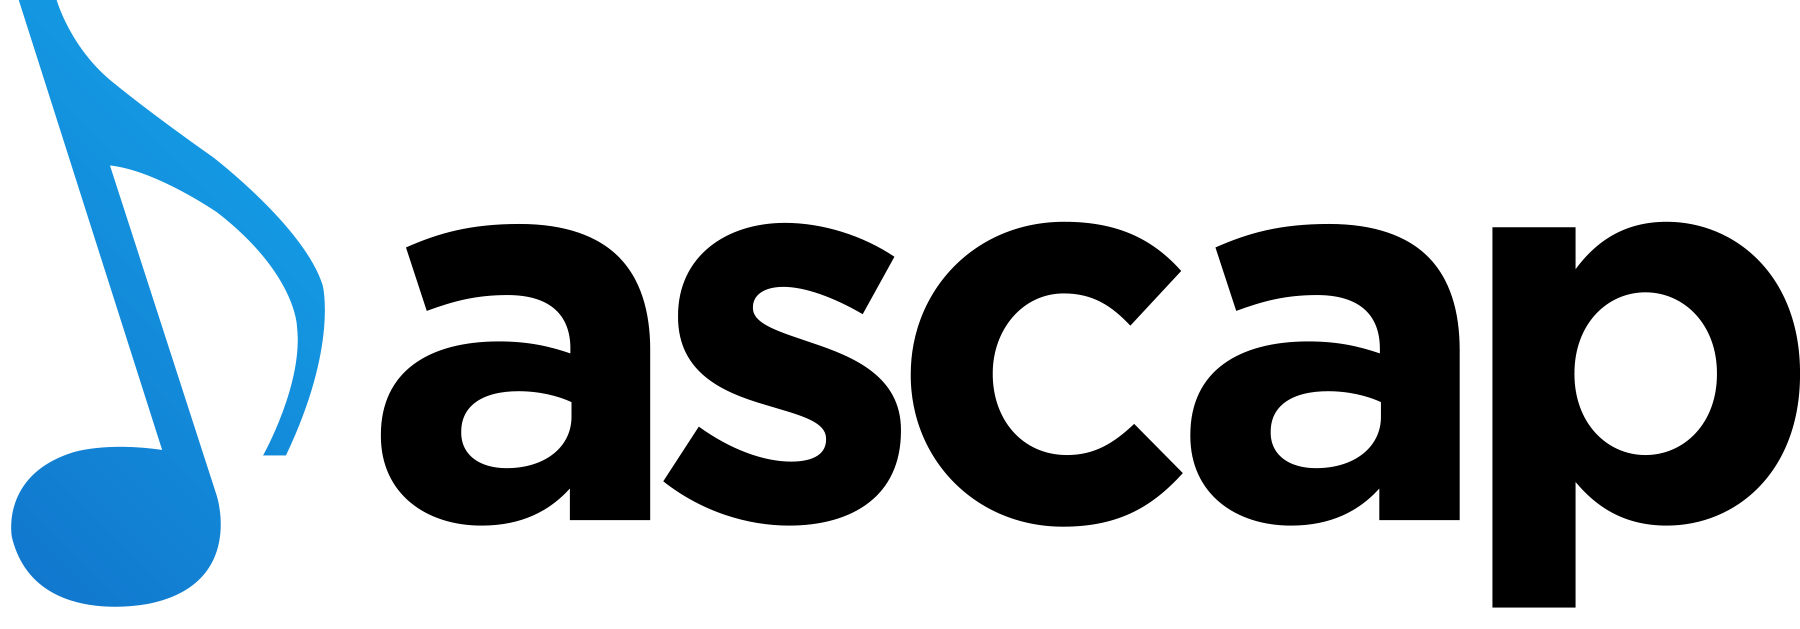 ASCAP Logo.png